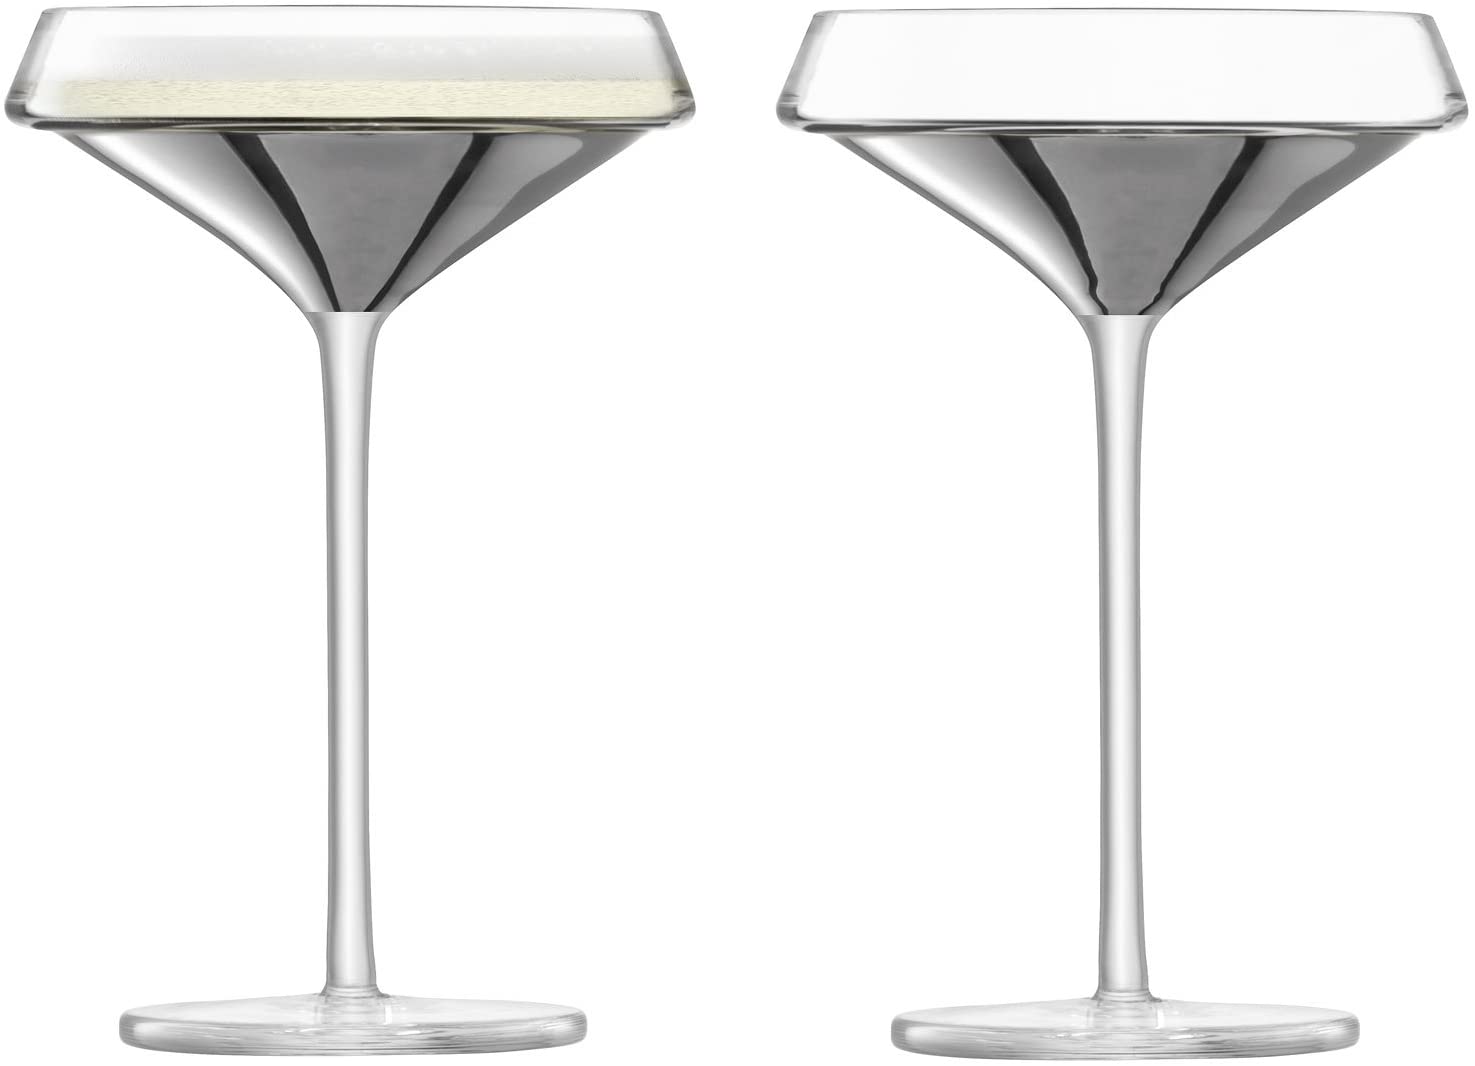 LSA International G1487-09-359 Square Champagne / Cocktail Glass 240ml x 2, Platinum